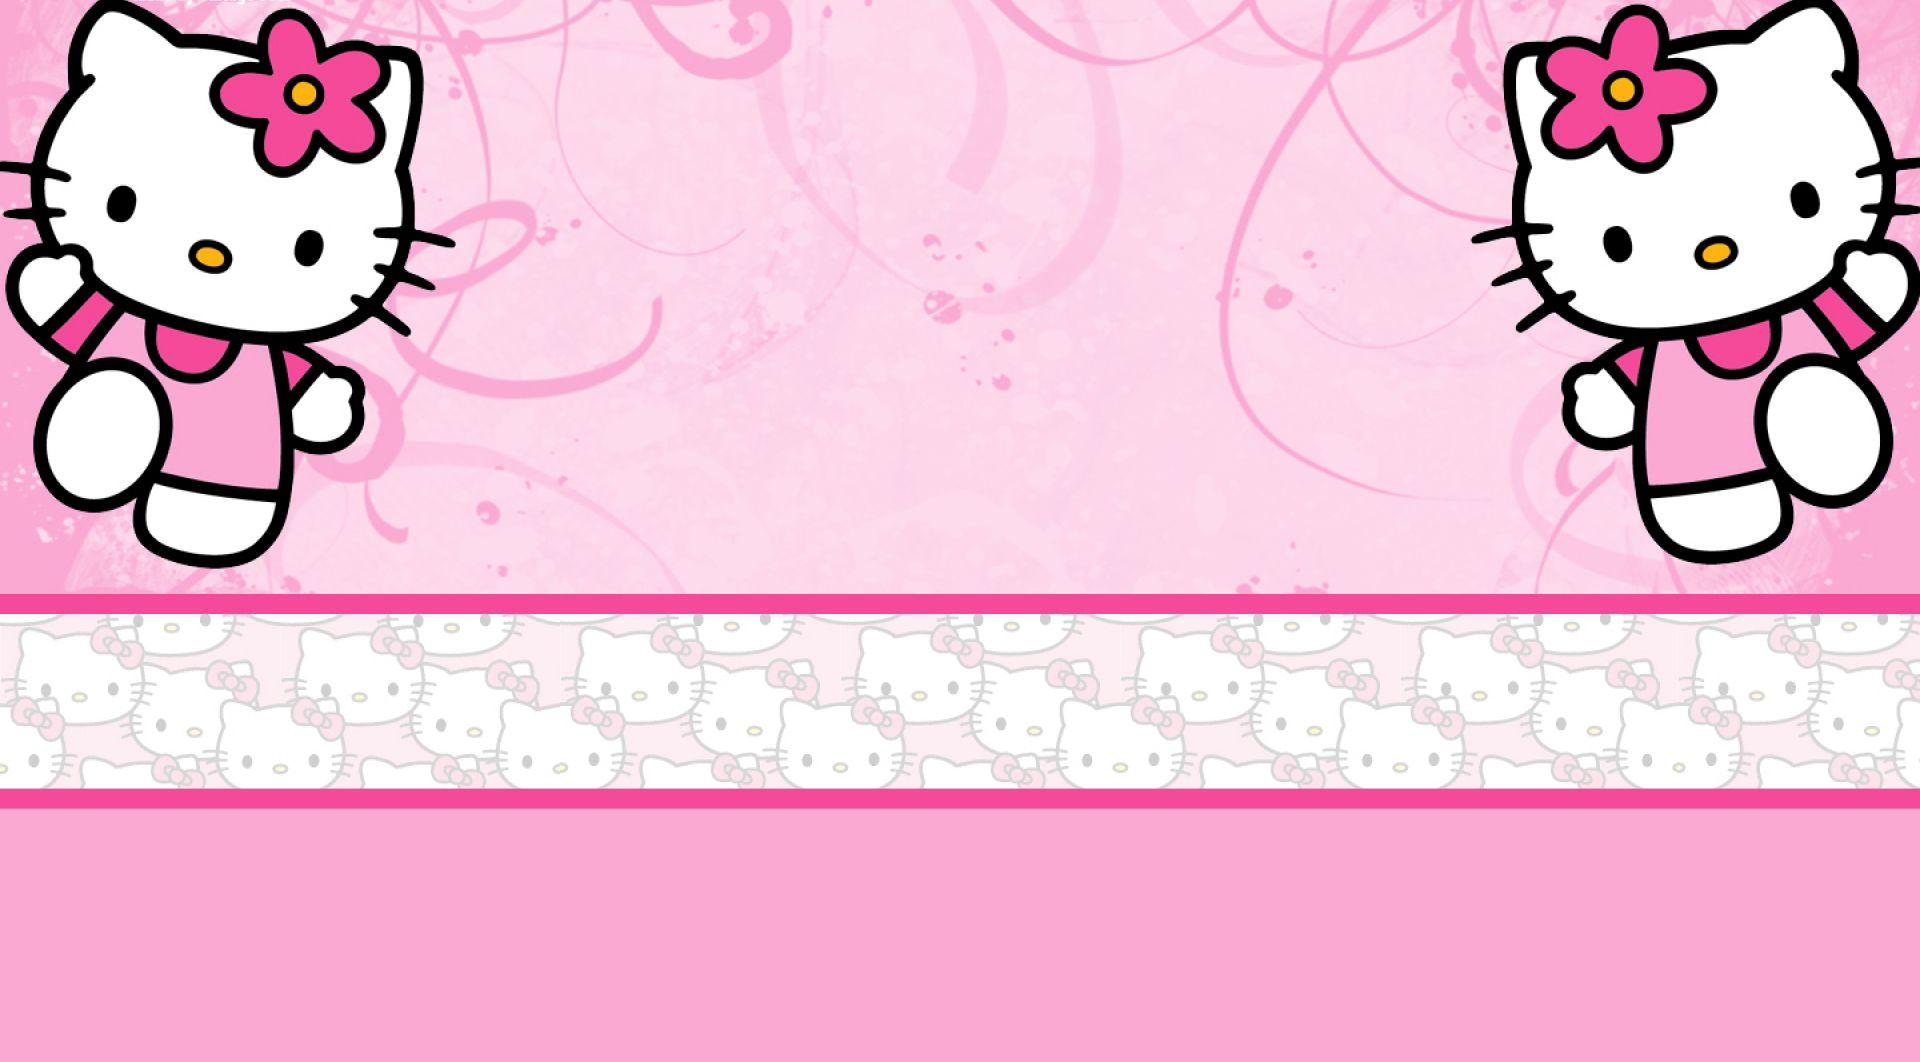 Wallpaper.wiki Hello Kitty Wallpaper Download PIC WPB001481